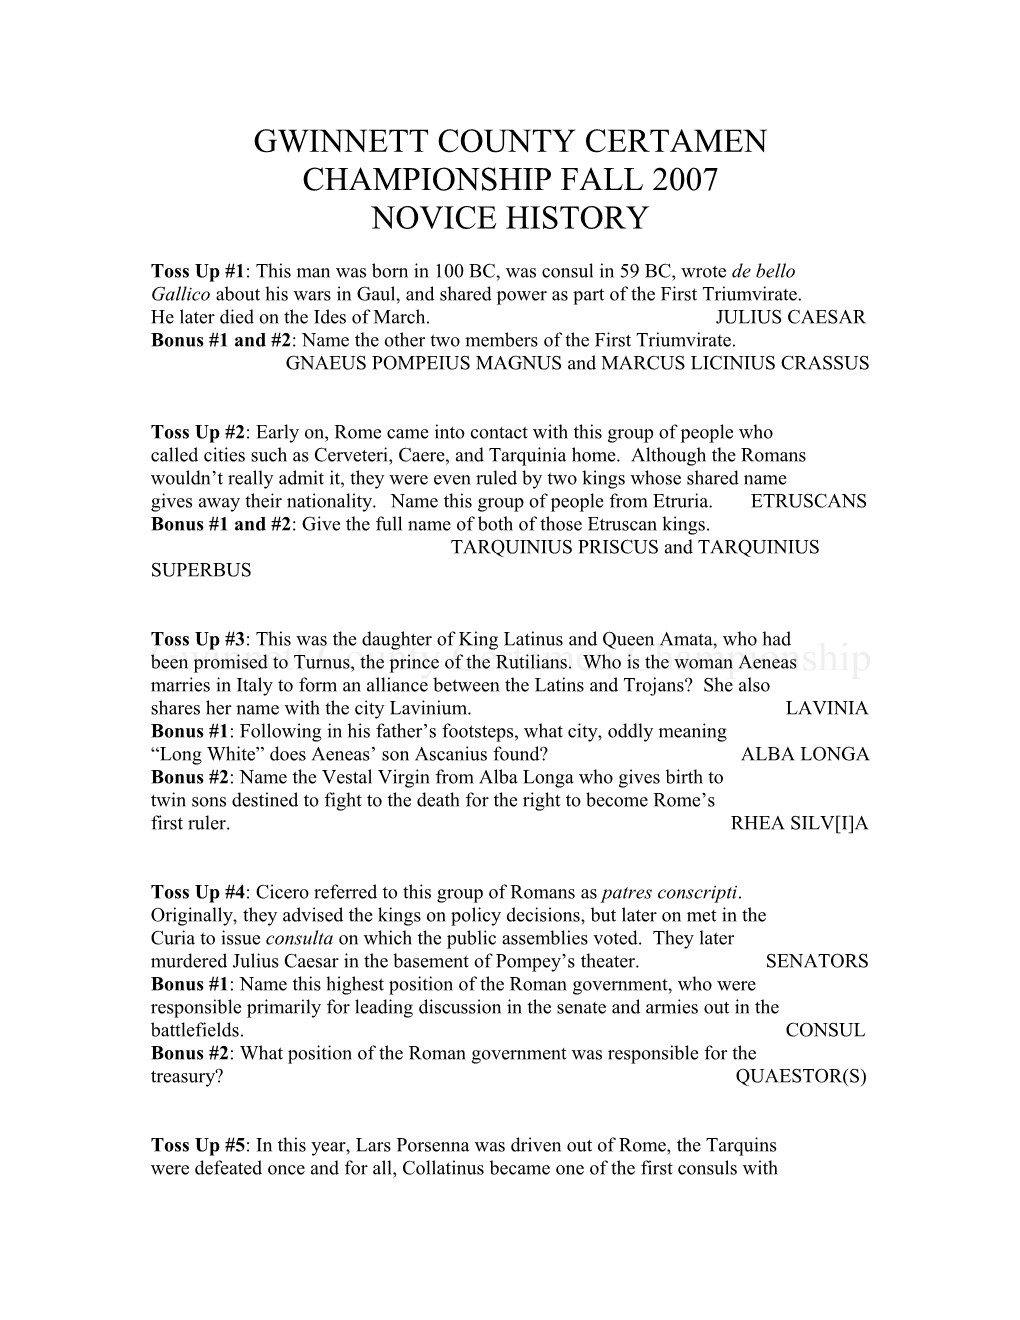 Gwinnett County Certamen Championship